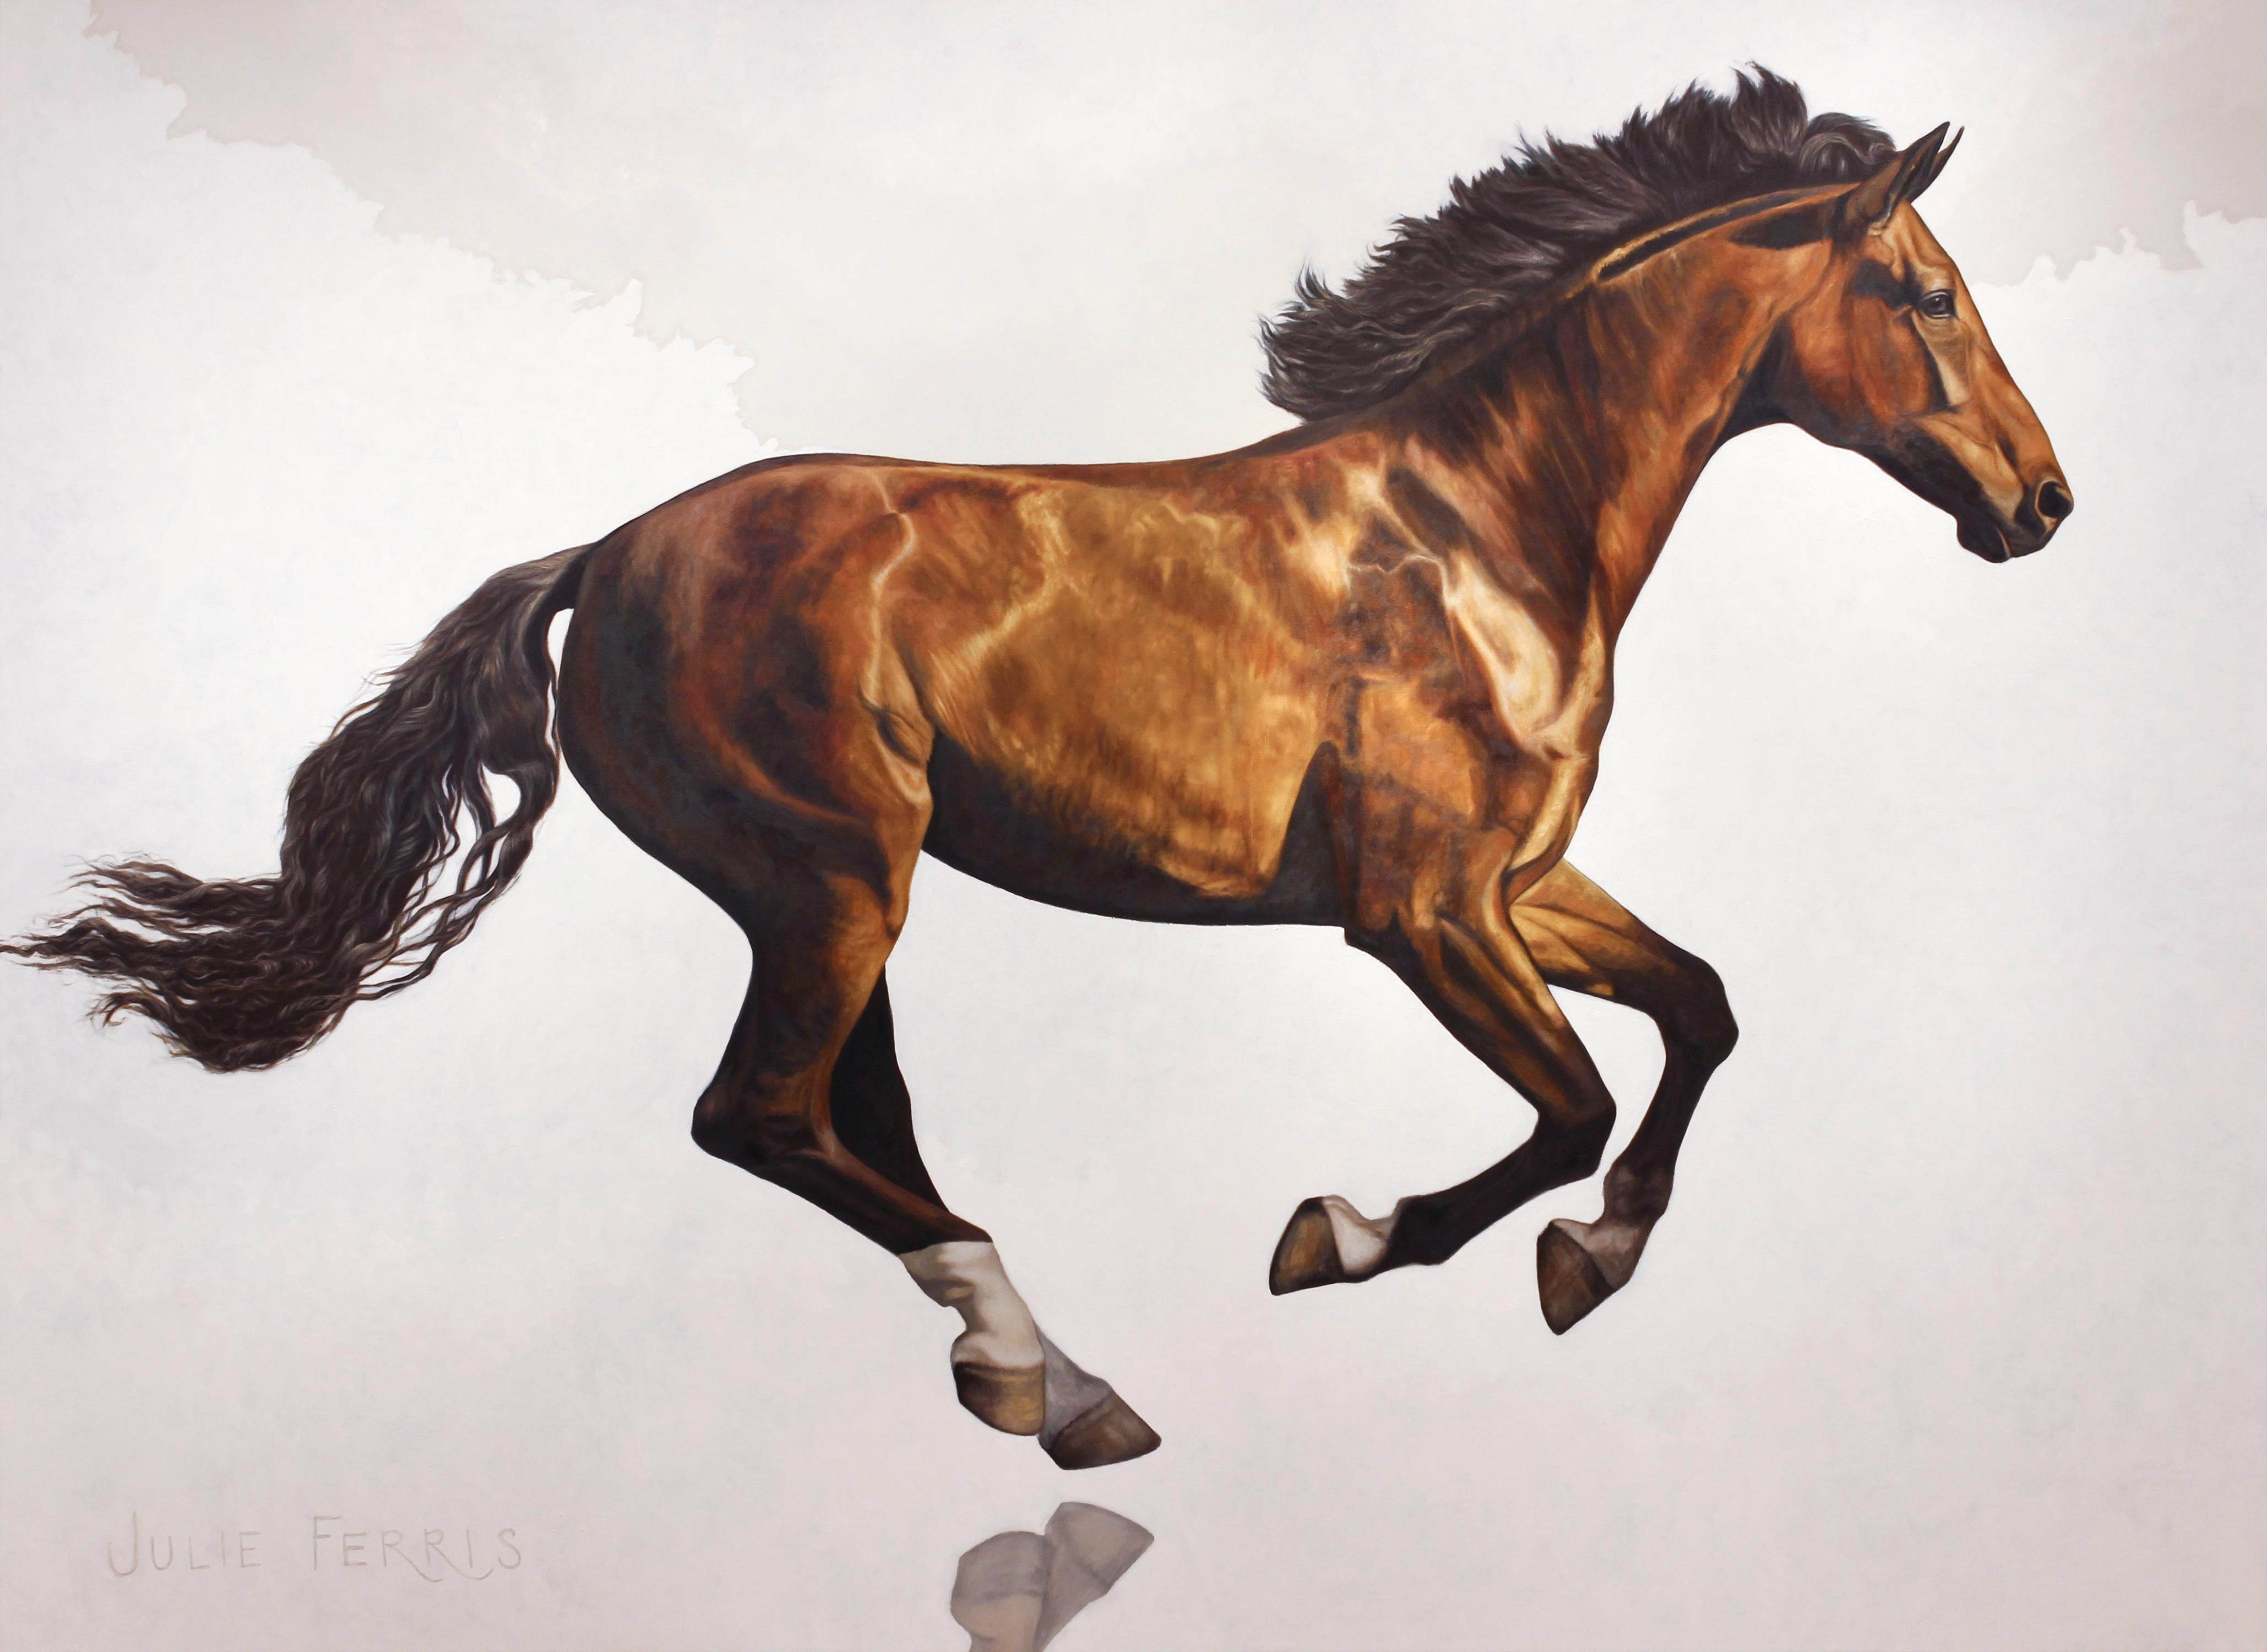 Julie Ferris Figurative Painting - "Sculpture in Motion" - American Realism - Horse Painting - Rosa Bonheur